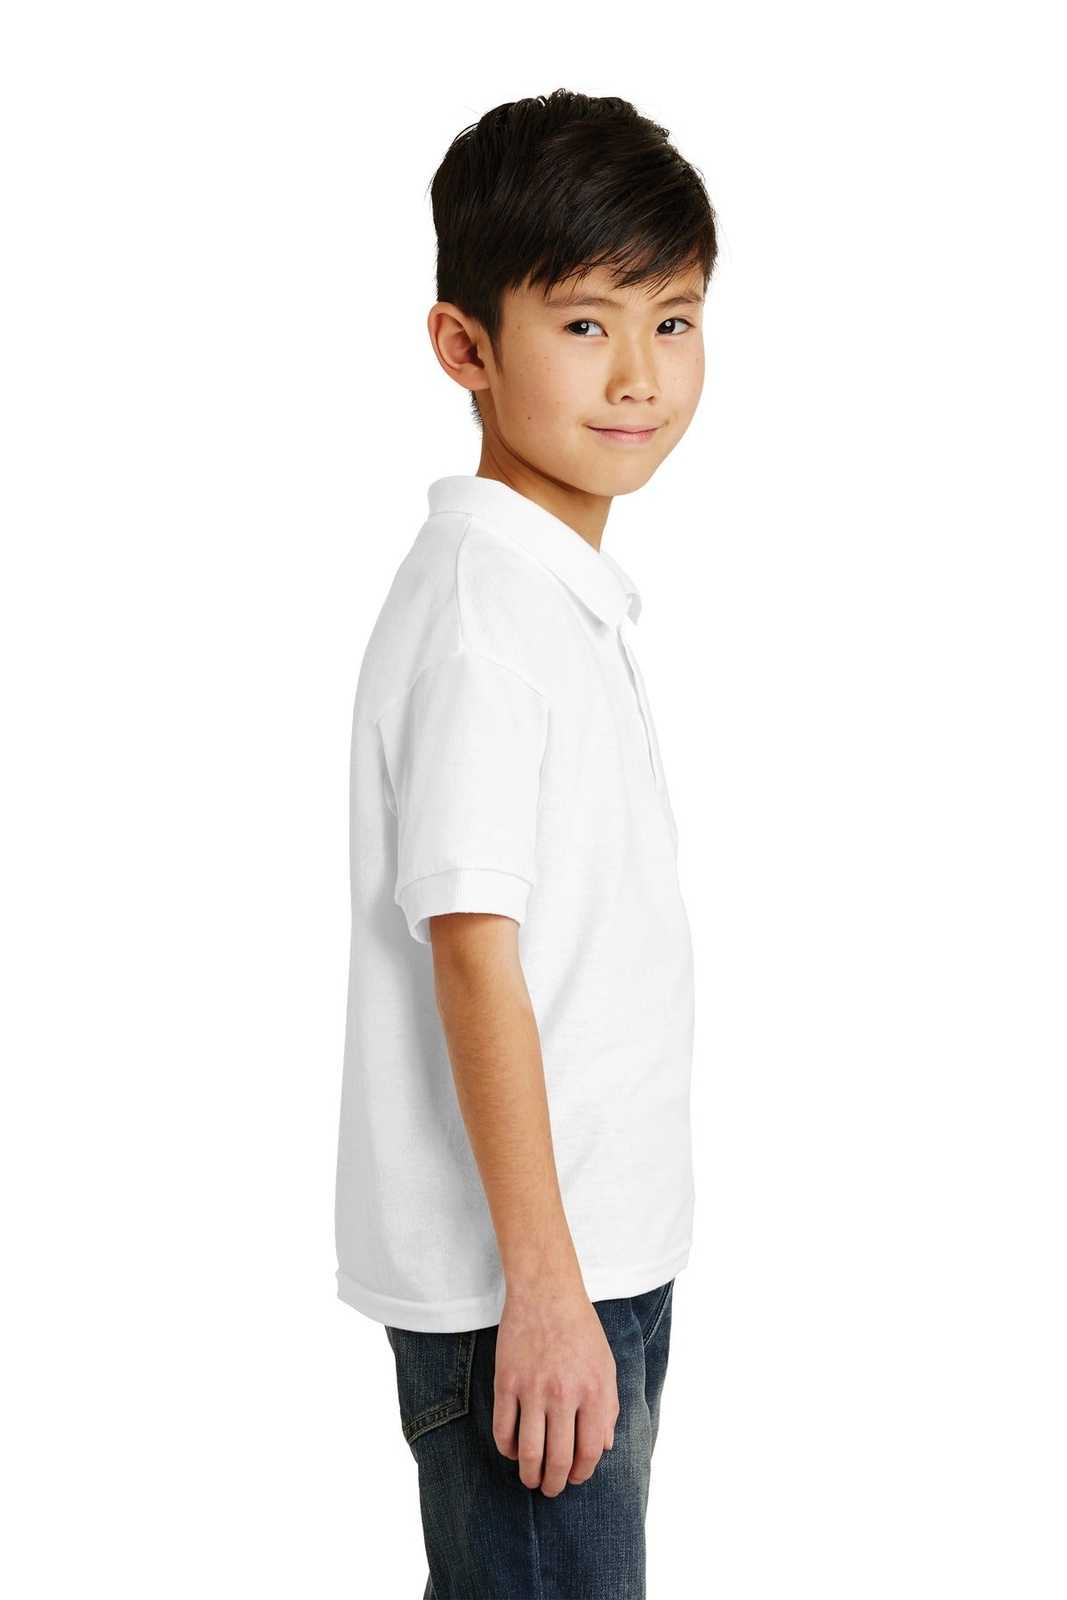 Gildan 8800B Youth Dryblend 6-Ounce Jersey Knit Sport Shirt - White - HIT a Double